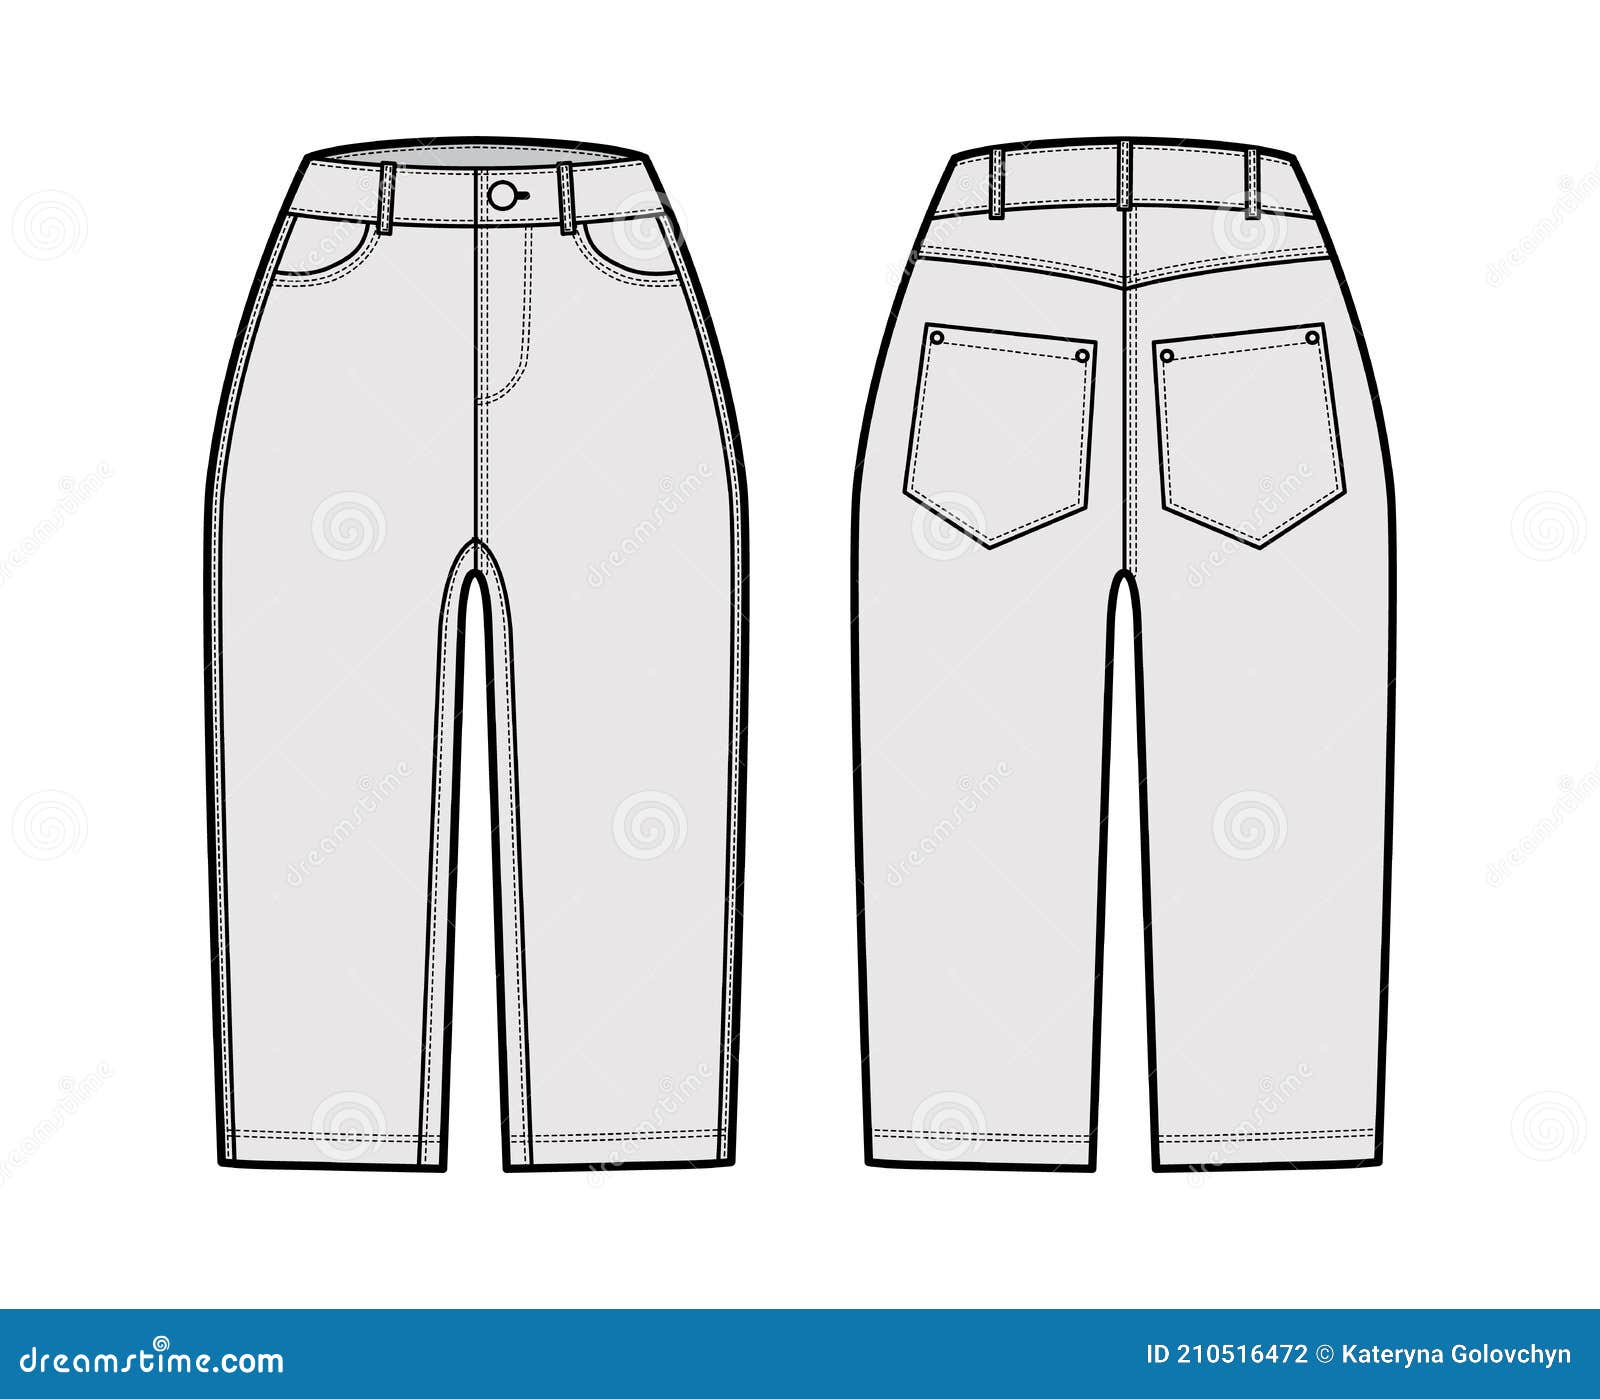 Denim Short Pants Technical Fashion Illustration with Knee Length ...